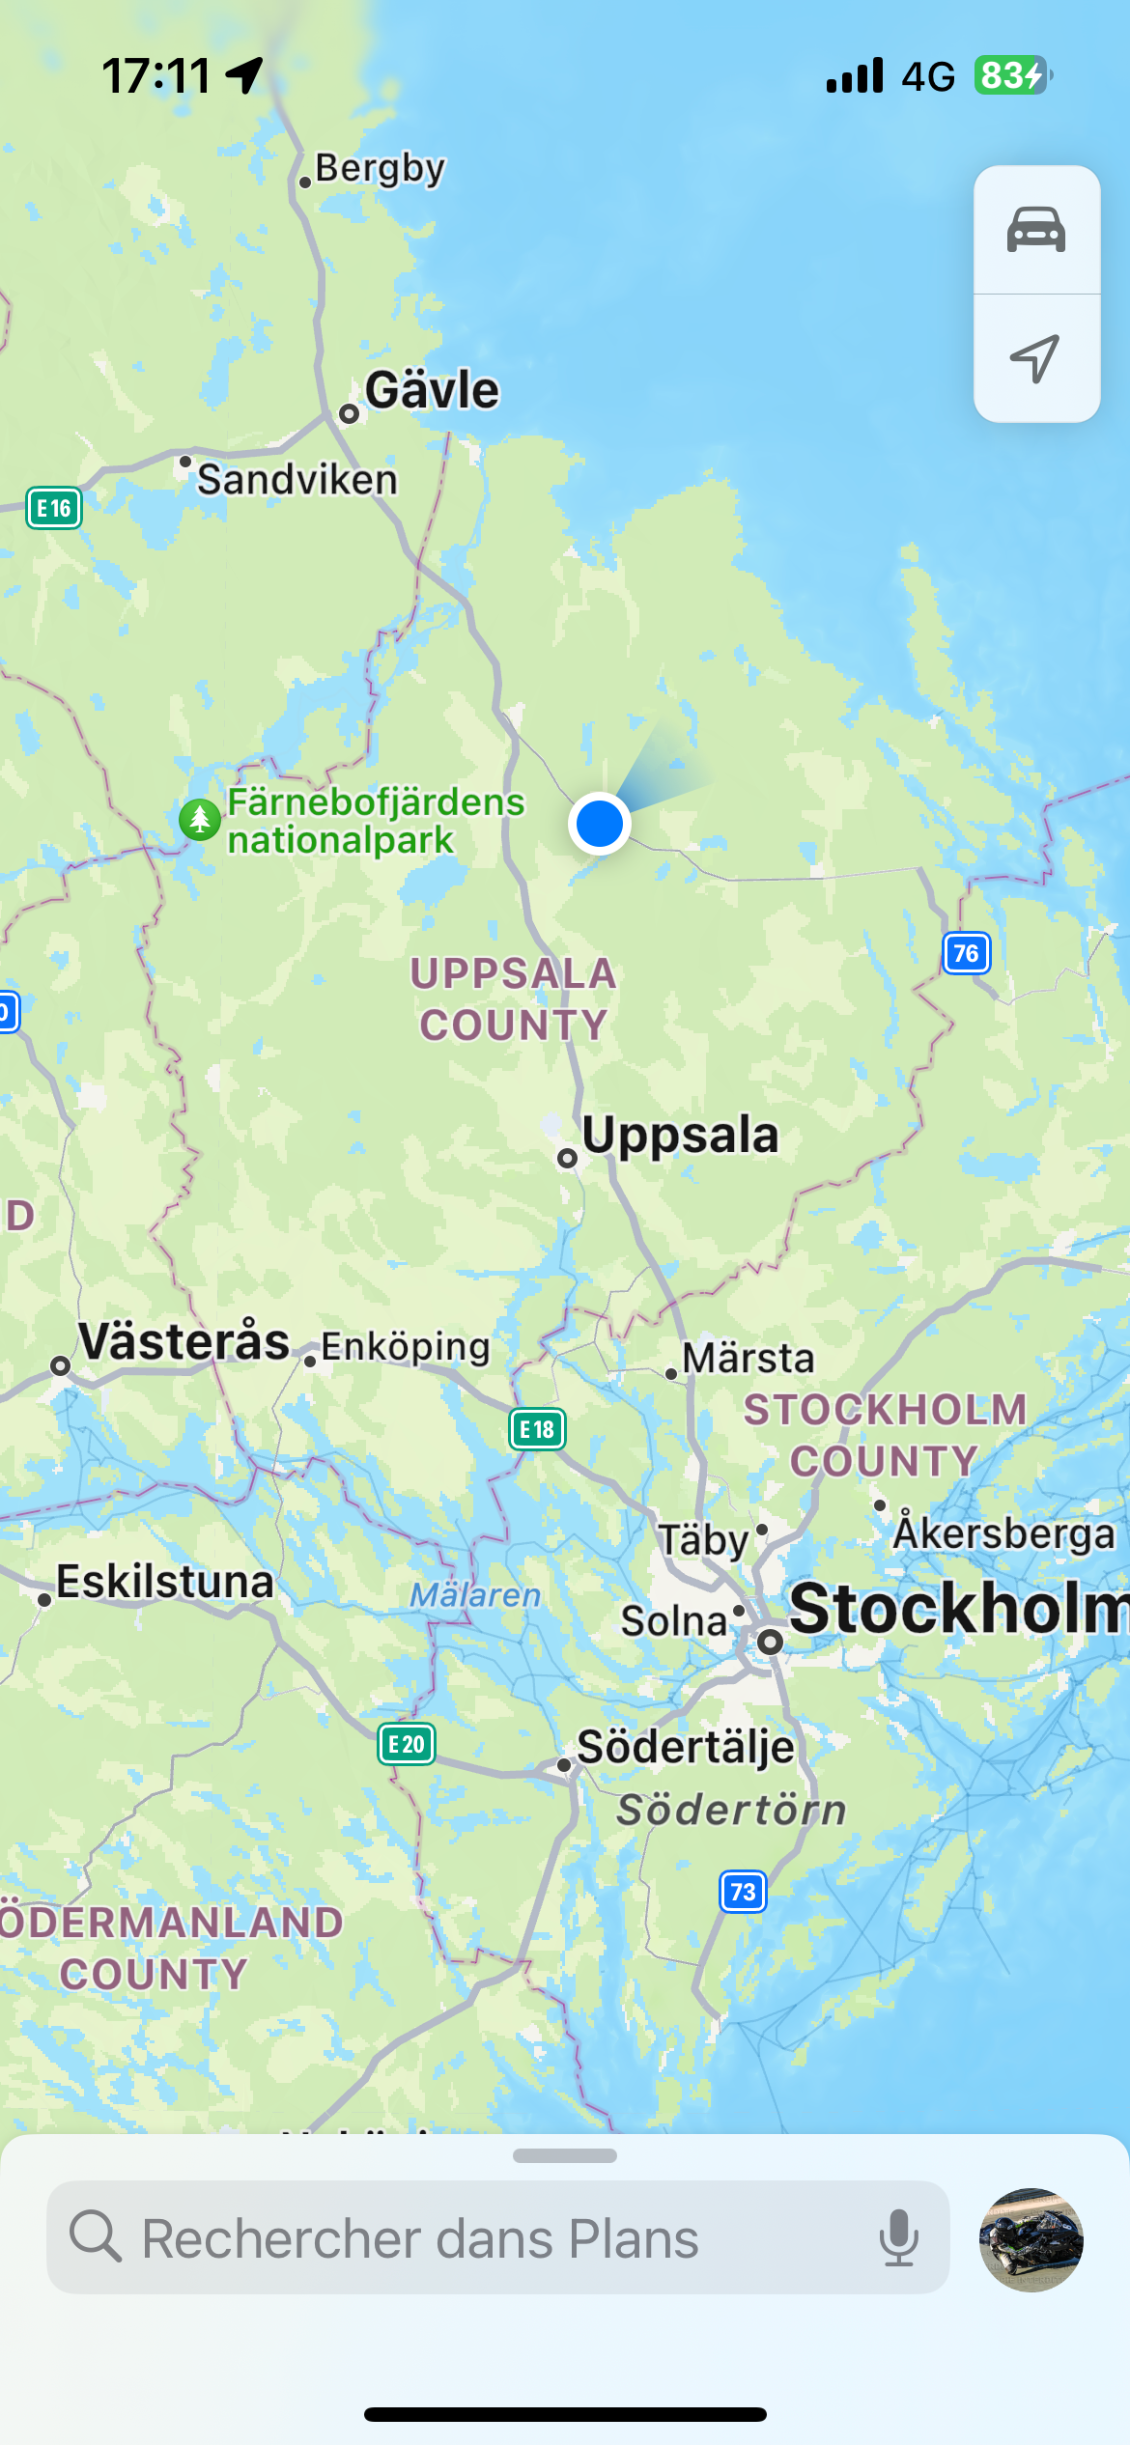 Jour 48 180 kms reste 130 kms pour rejoindre Stockholm